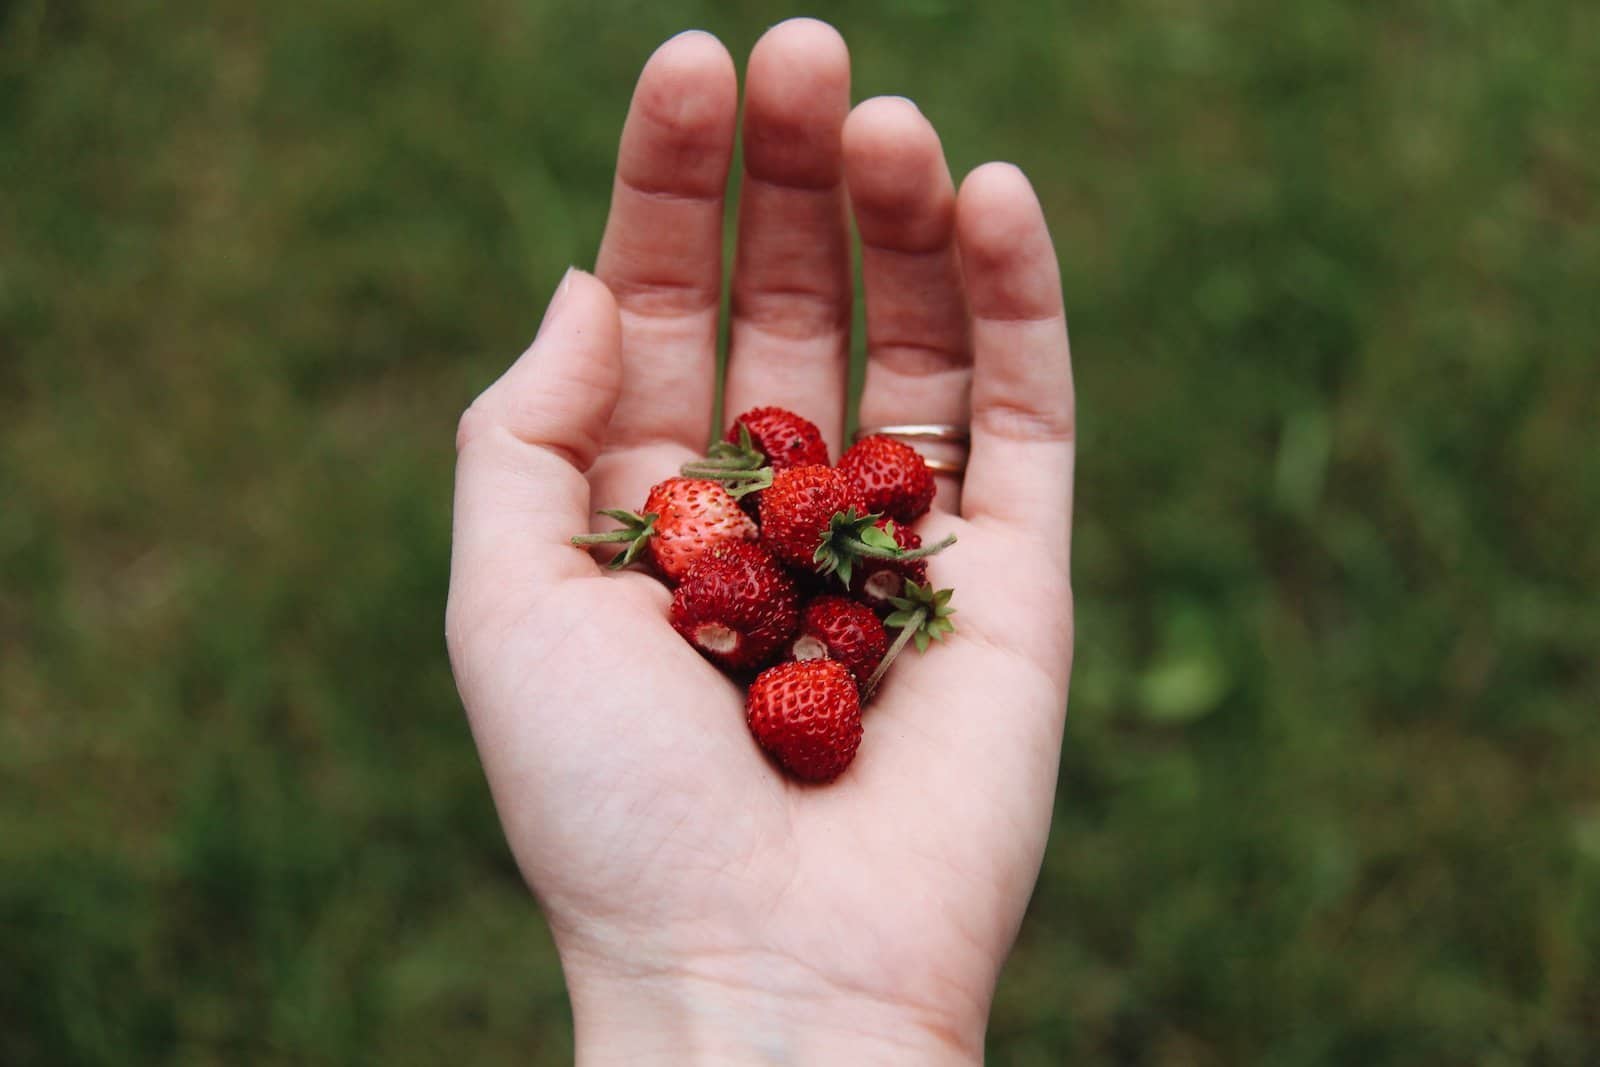 Alpine strawberries held in a hand